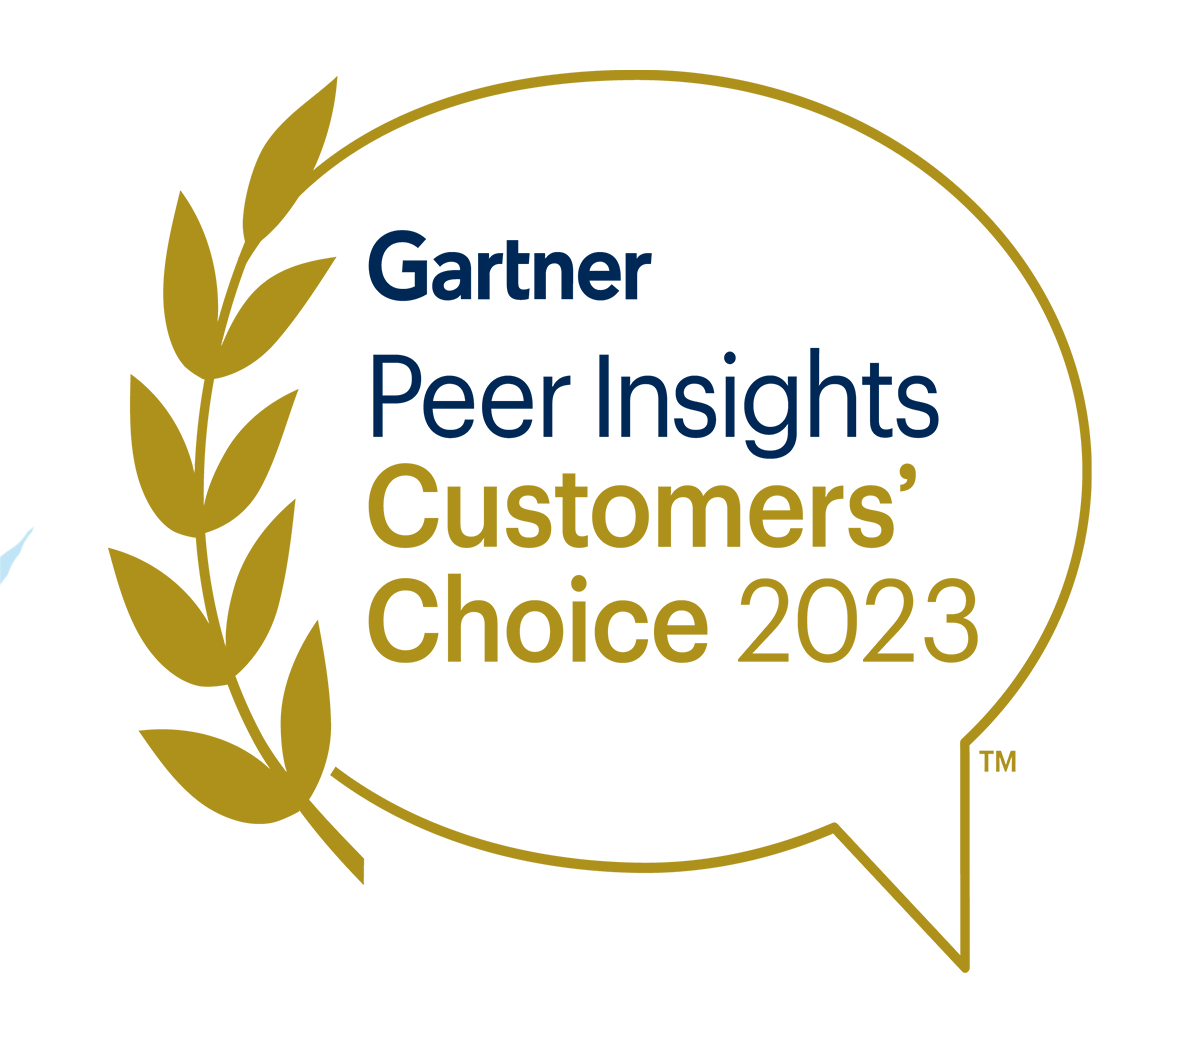 Gartner Peer Insights Customers’ Choice 2023 